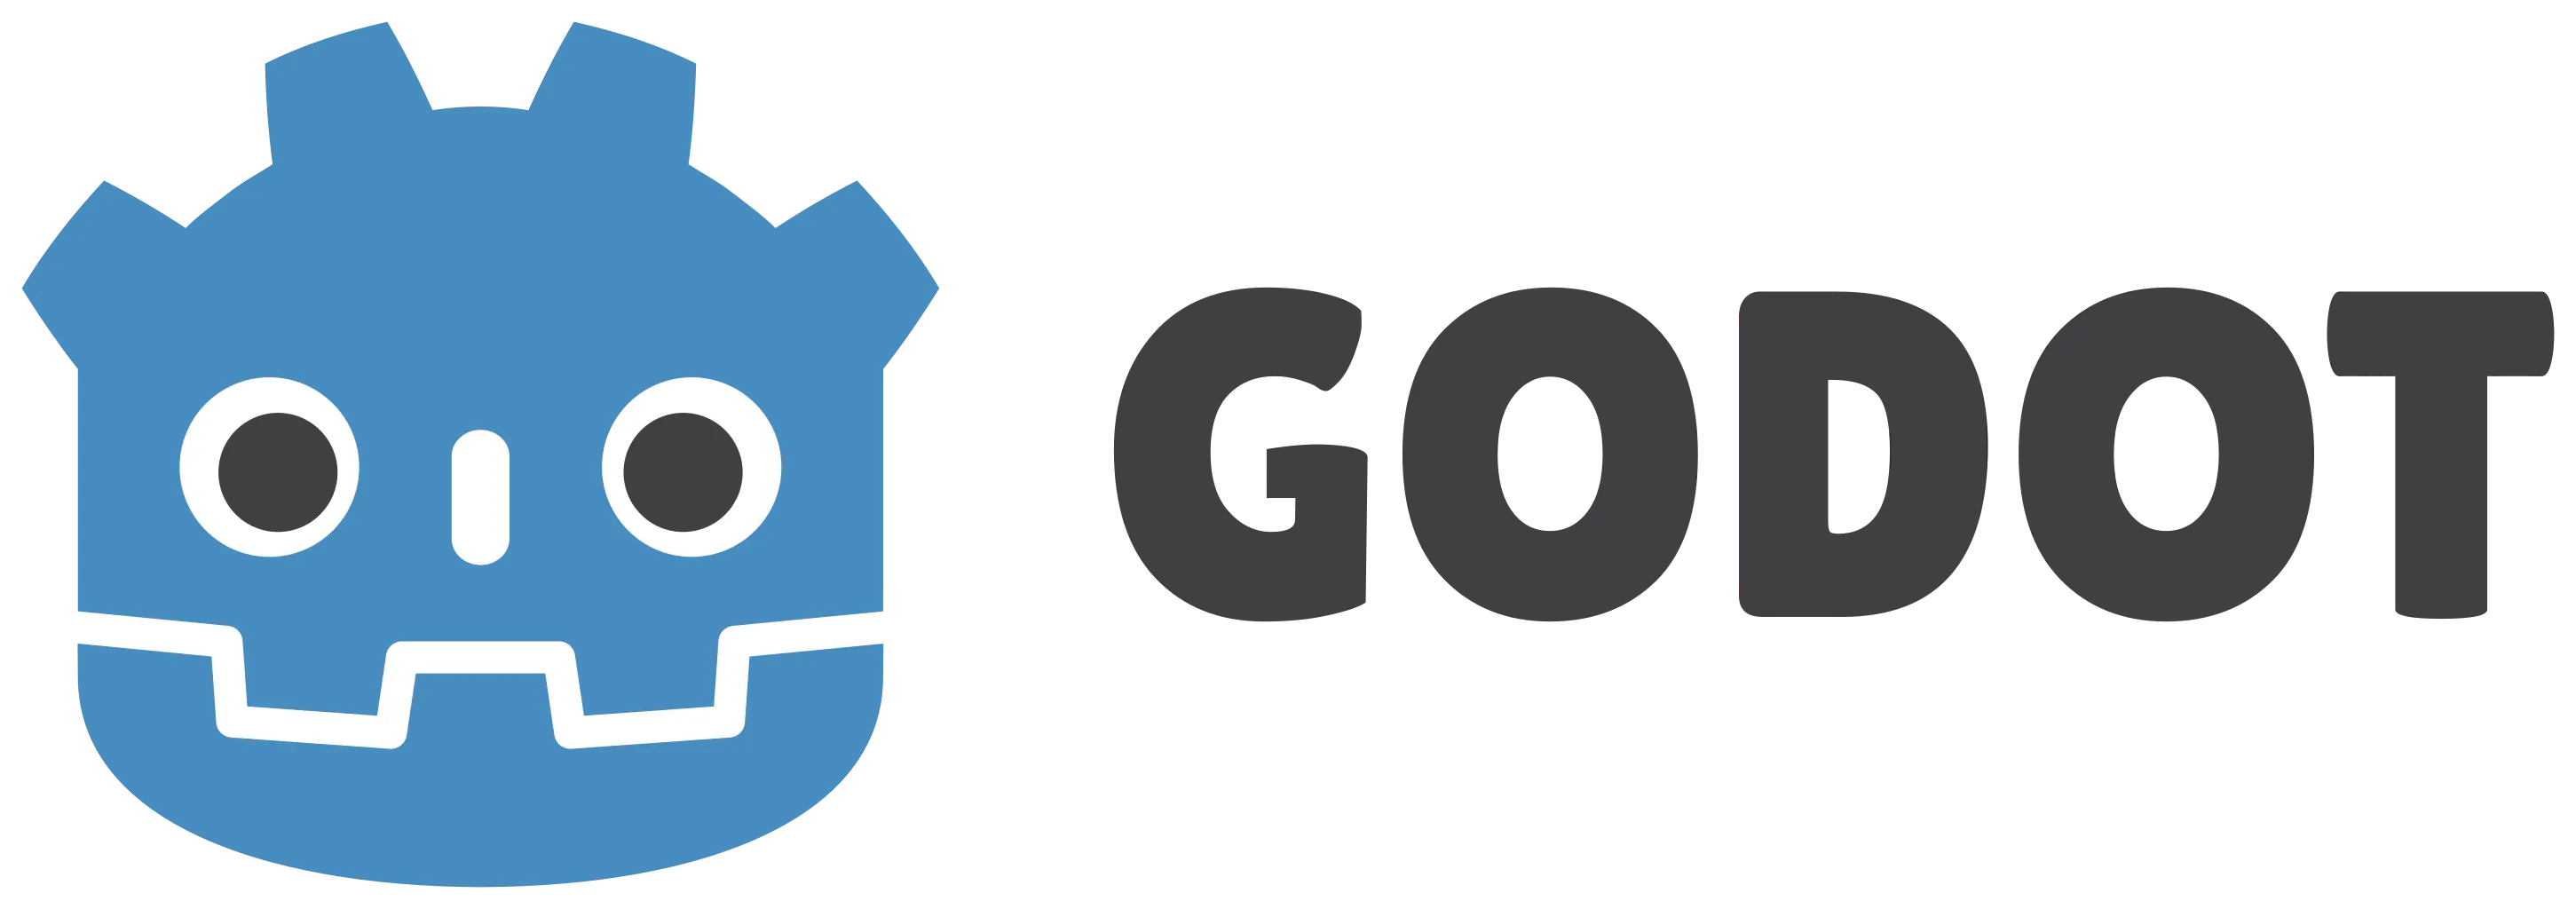 Godot engine logo and link